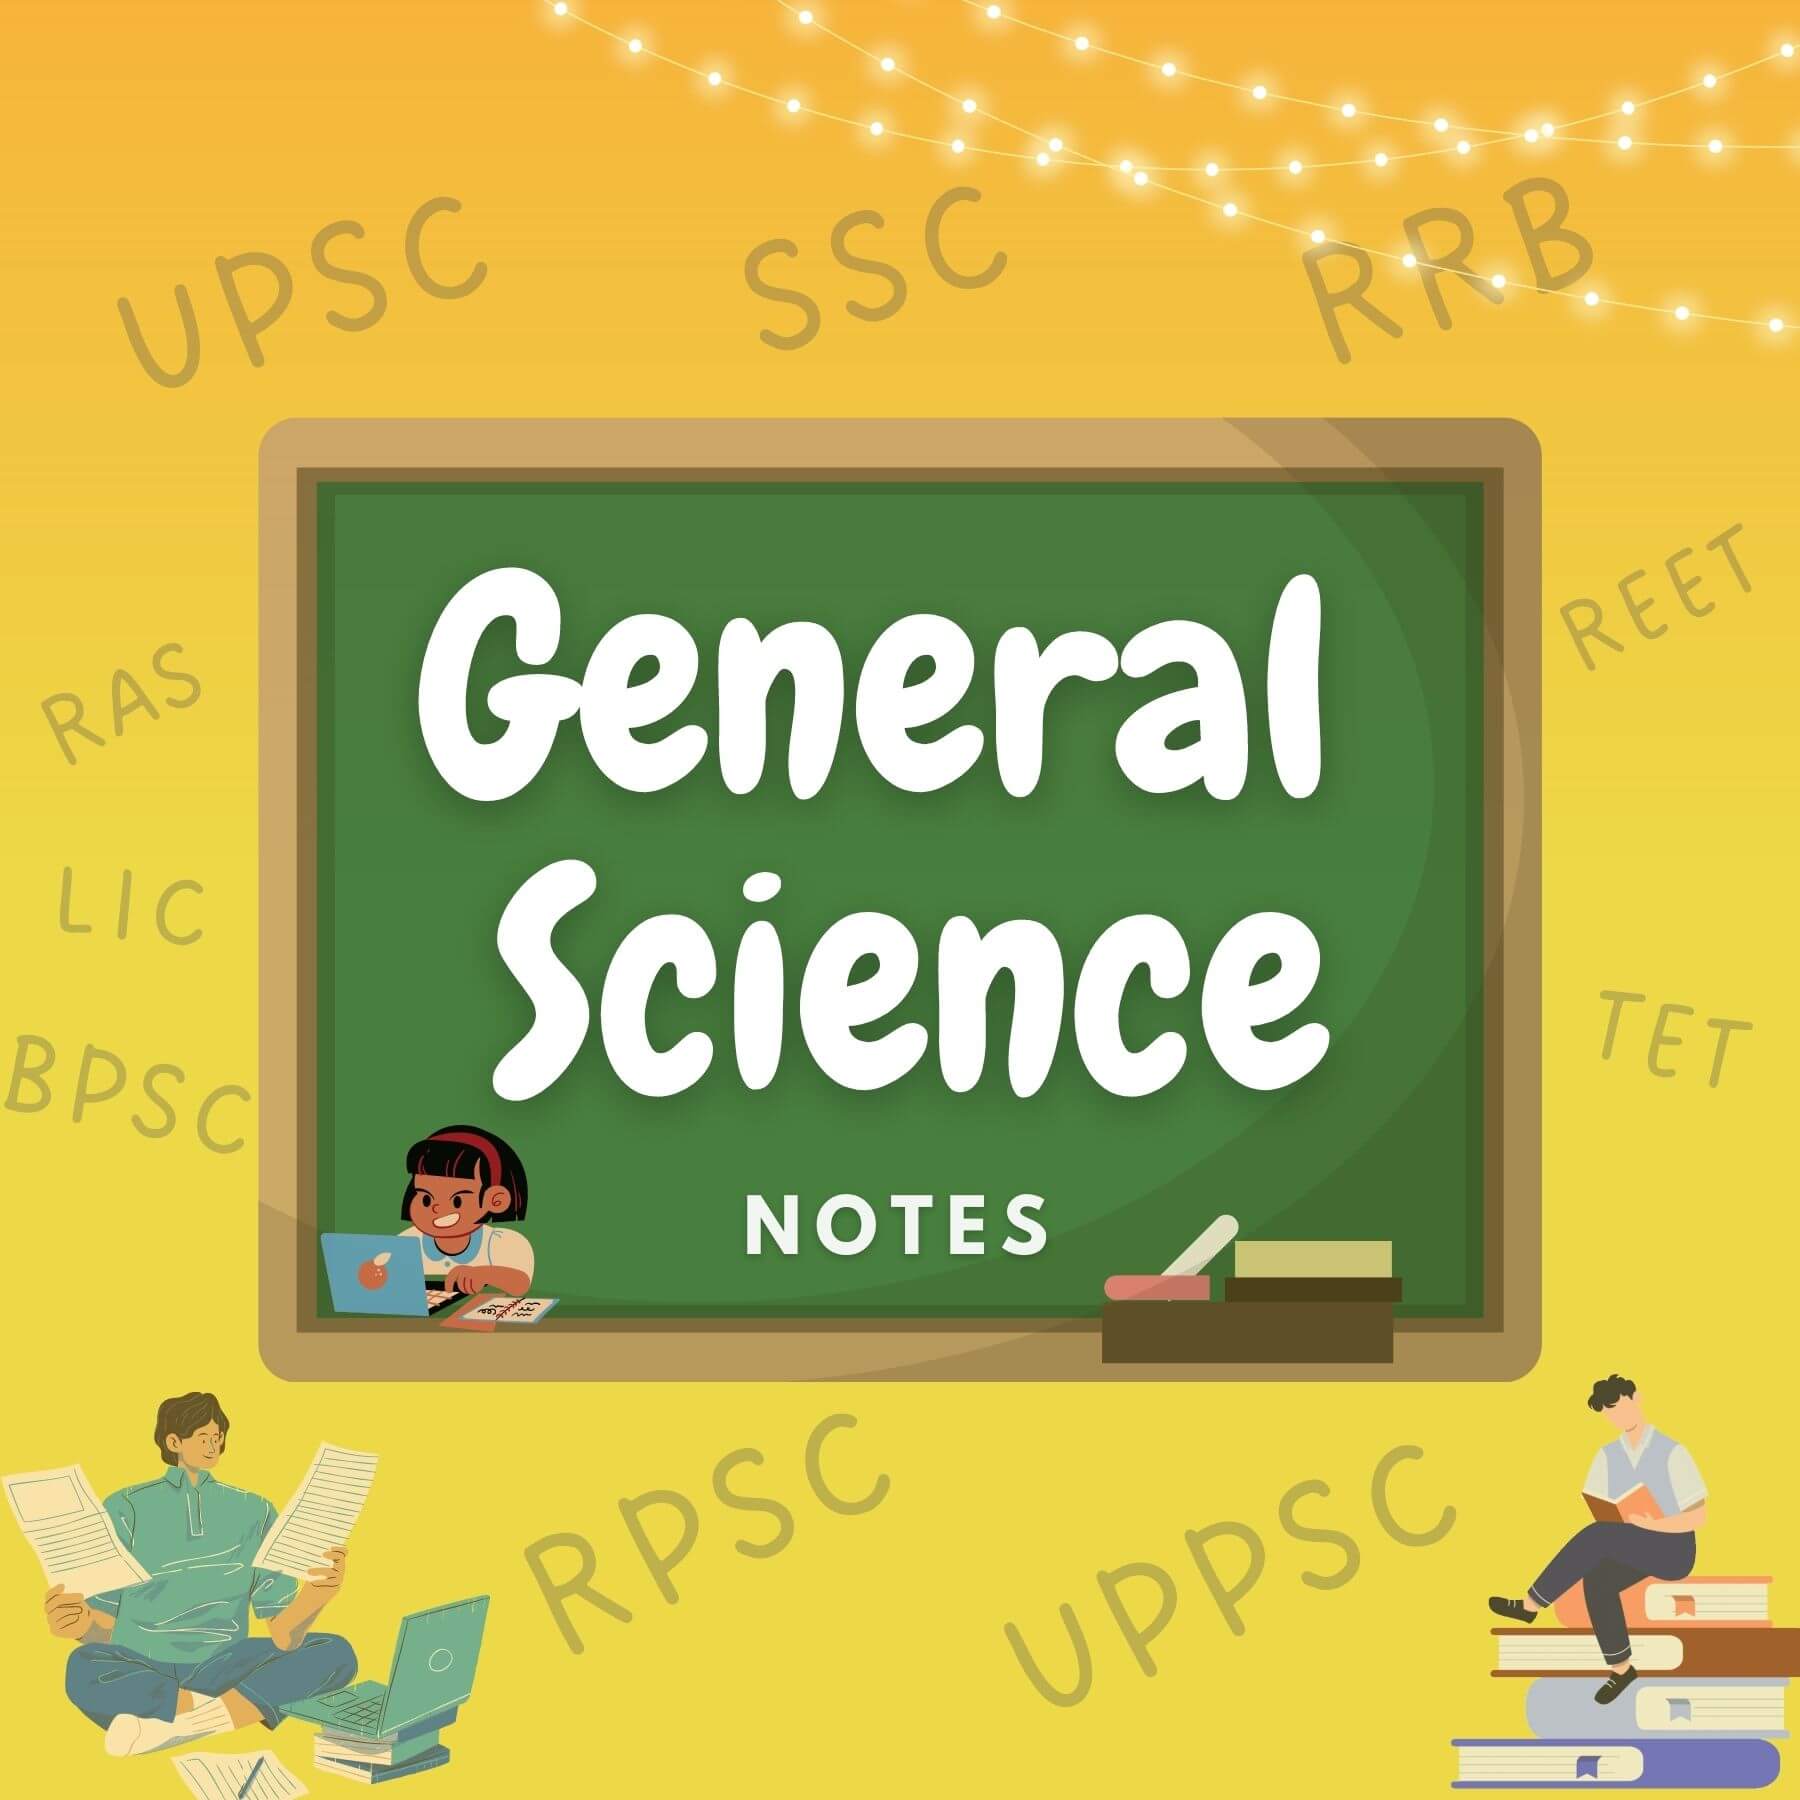 General Science (Handwritten) Notes PDF In Hindi & English - QnA